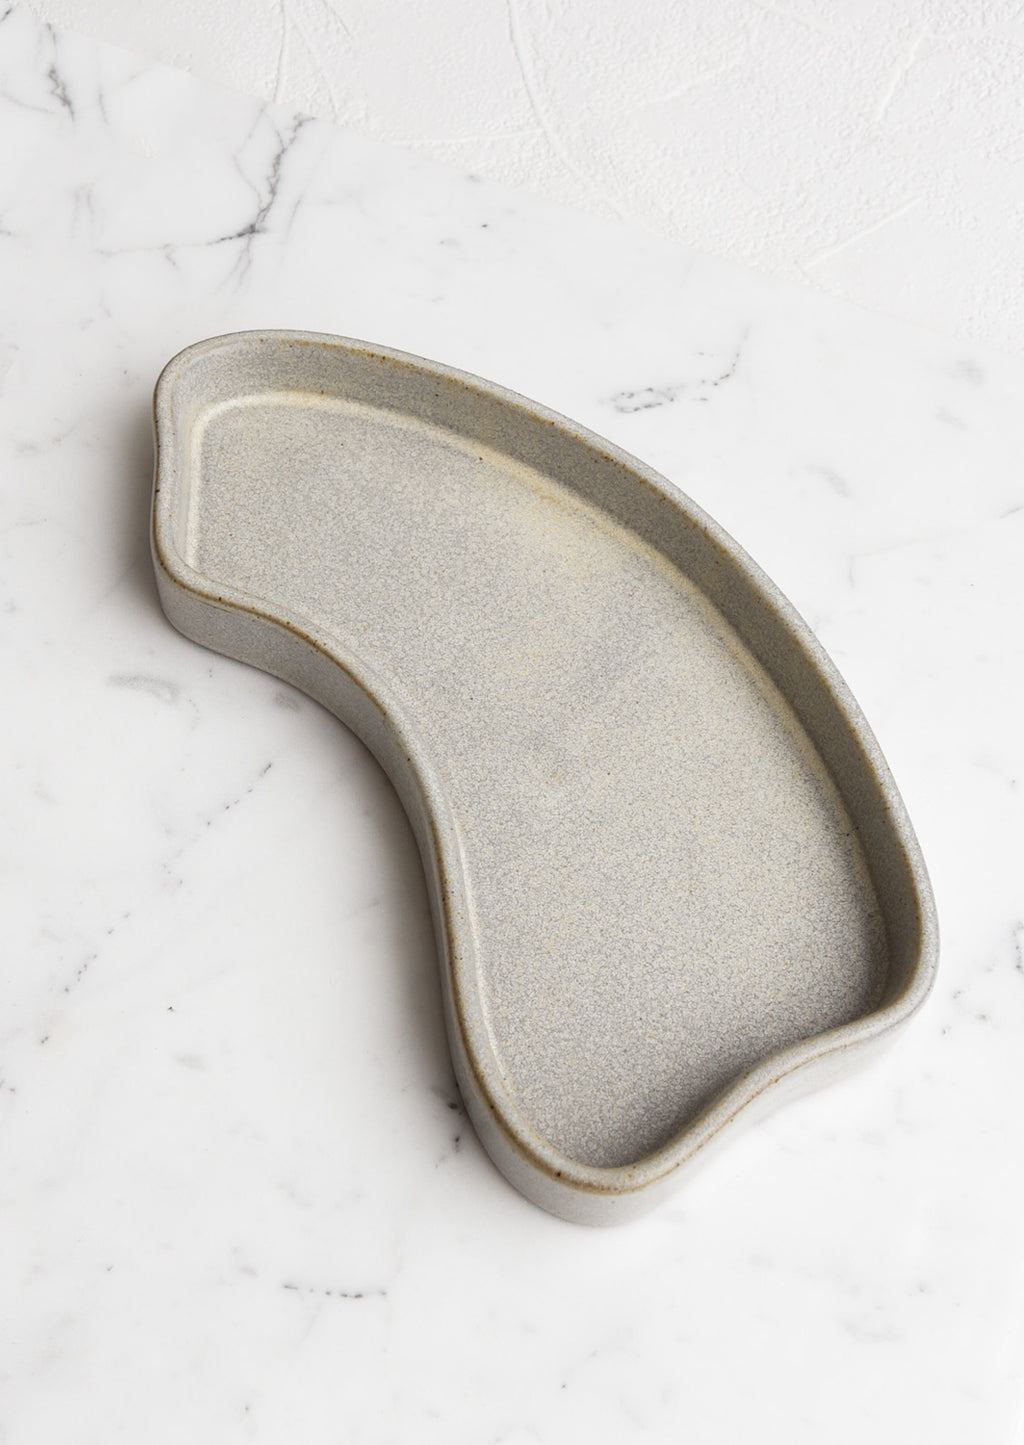 Medium / Grey: An asymmetrical medium sized ceramic tray in textured gray.